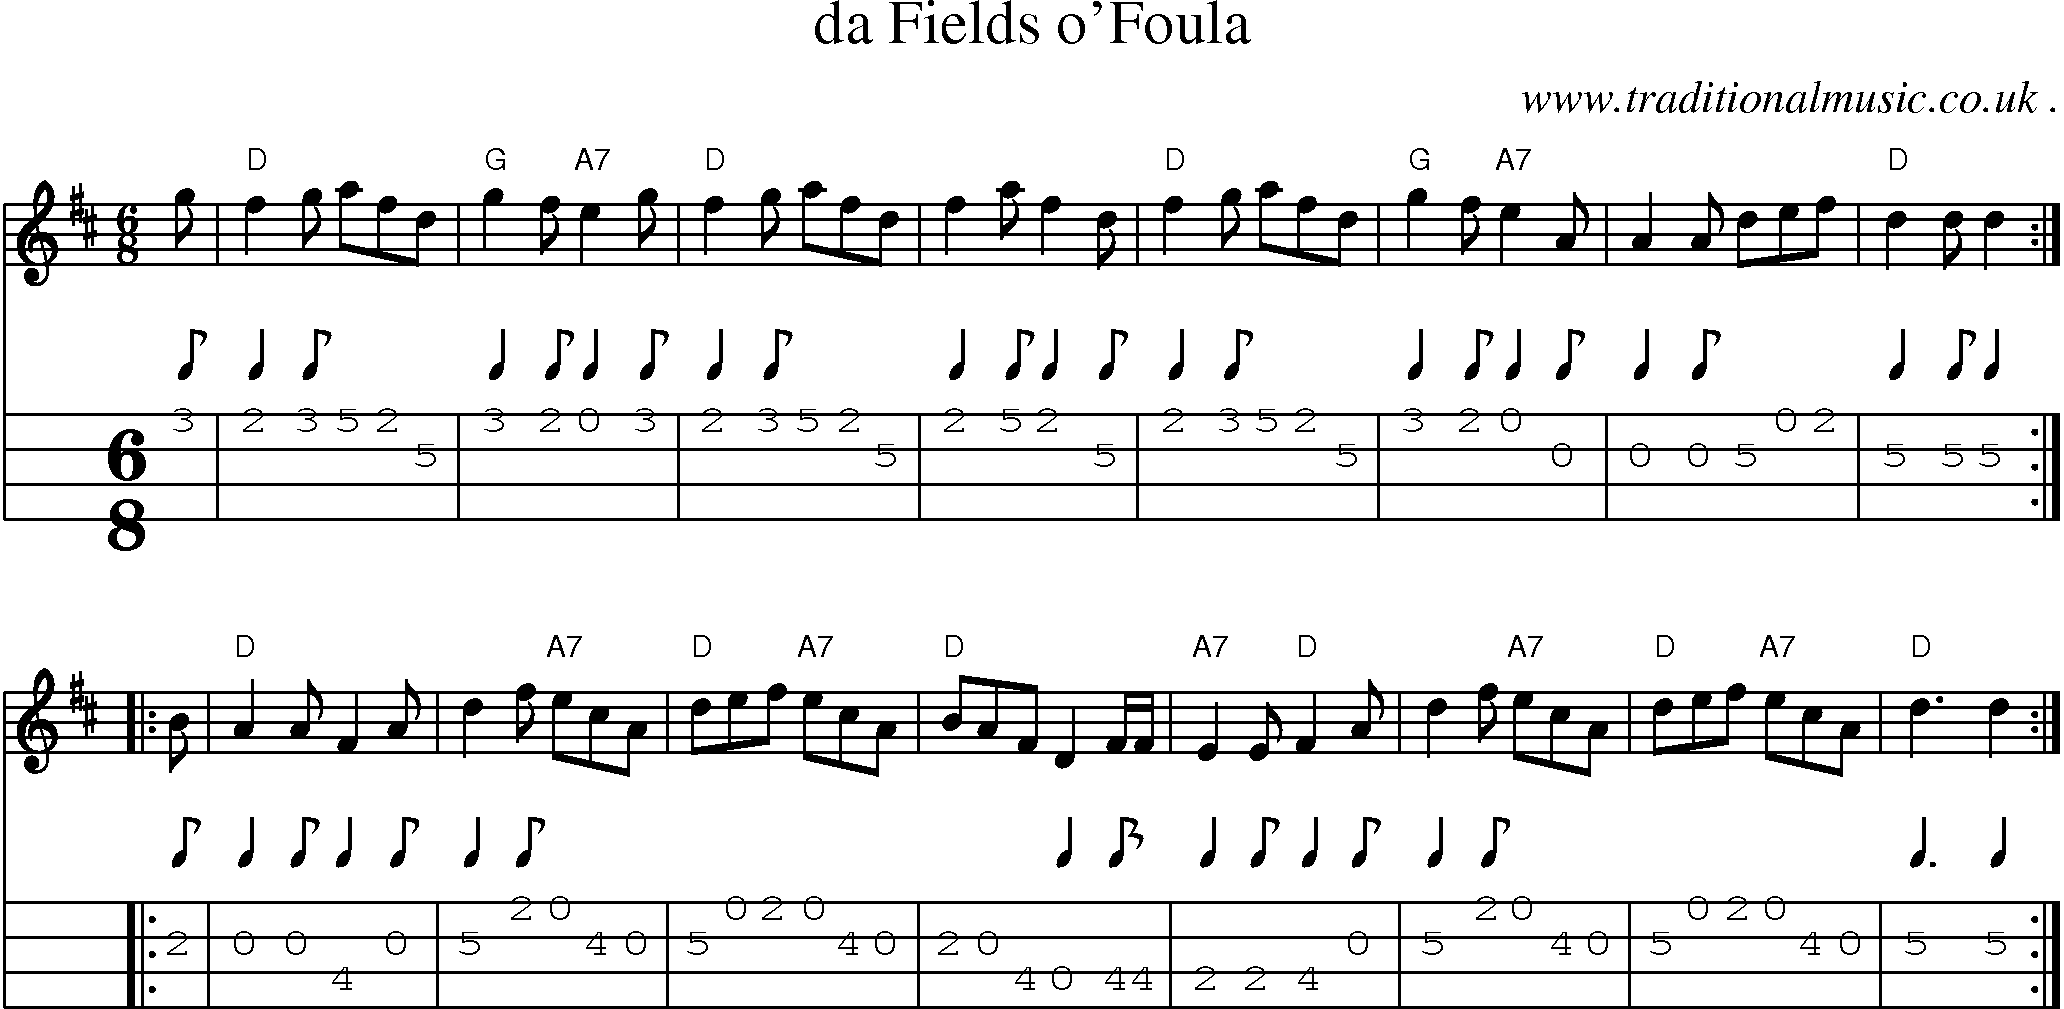 Sheet-music  score, Chords and Mandolin Tabs for Da Fields Ofoula